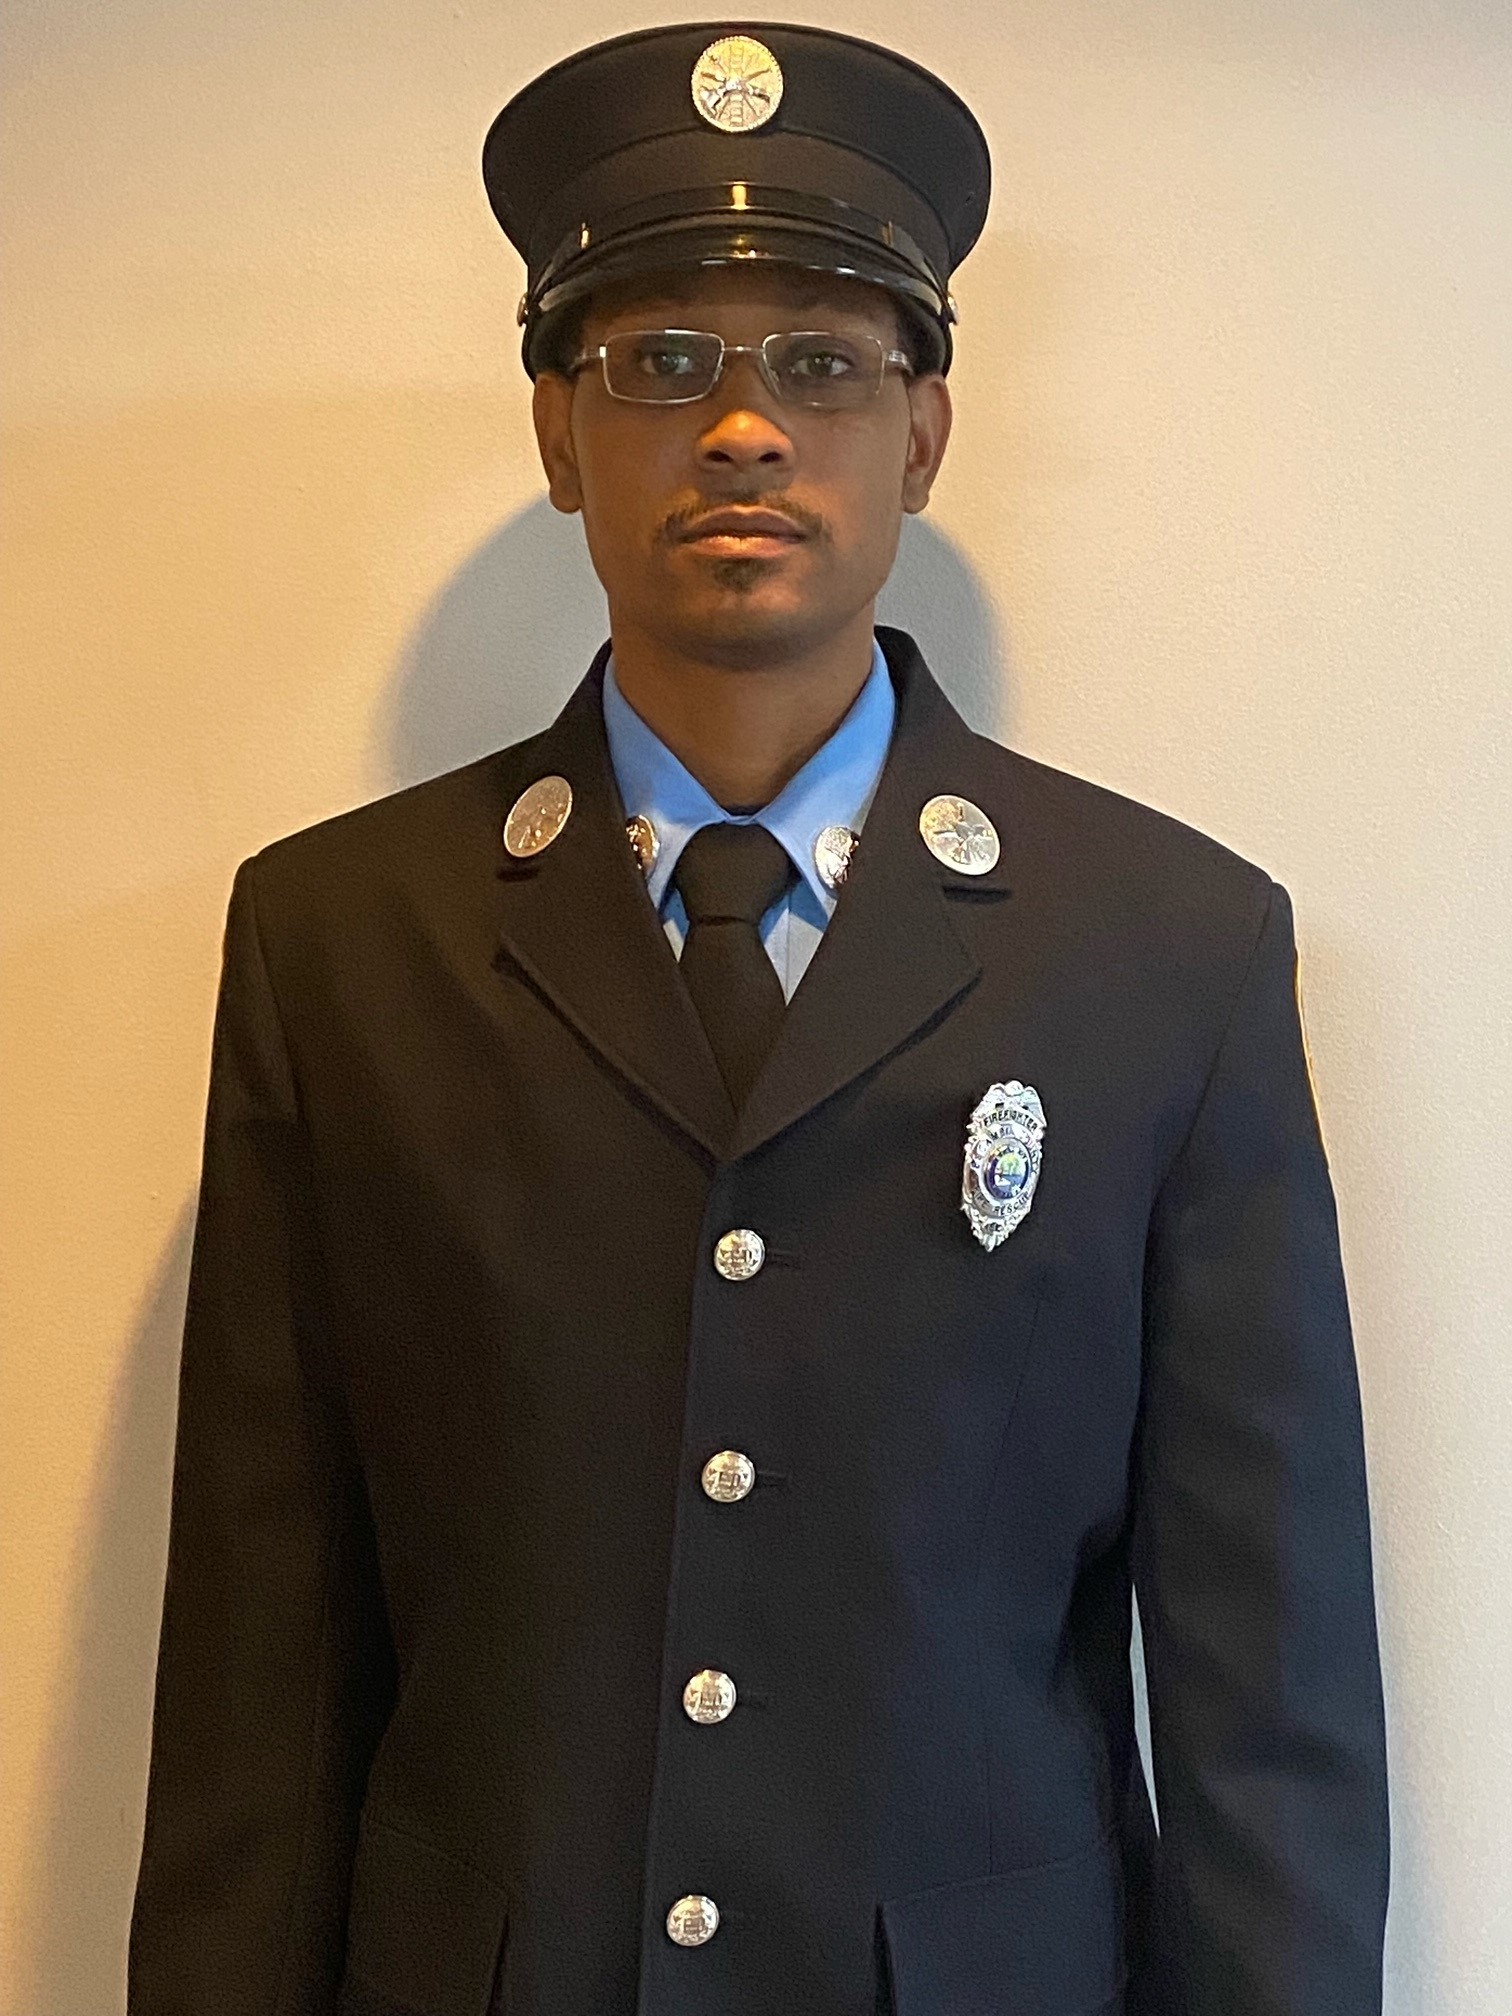 Lt. Jackson wearing his Class A uniform.